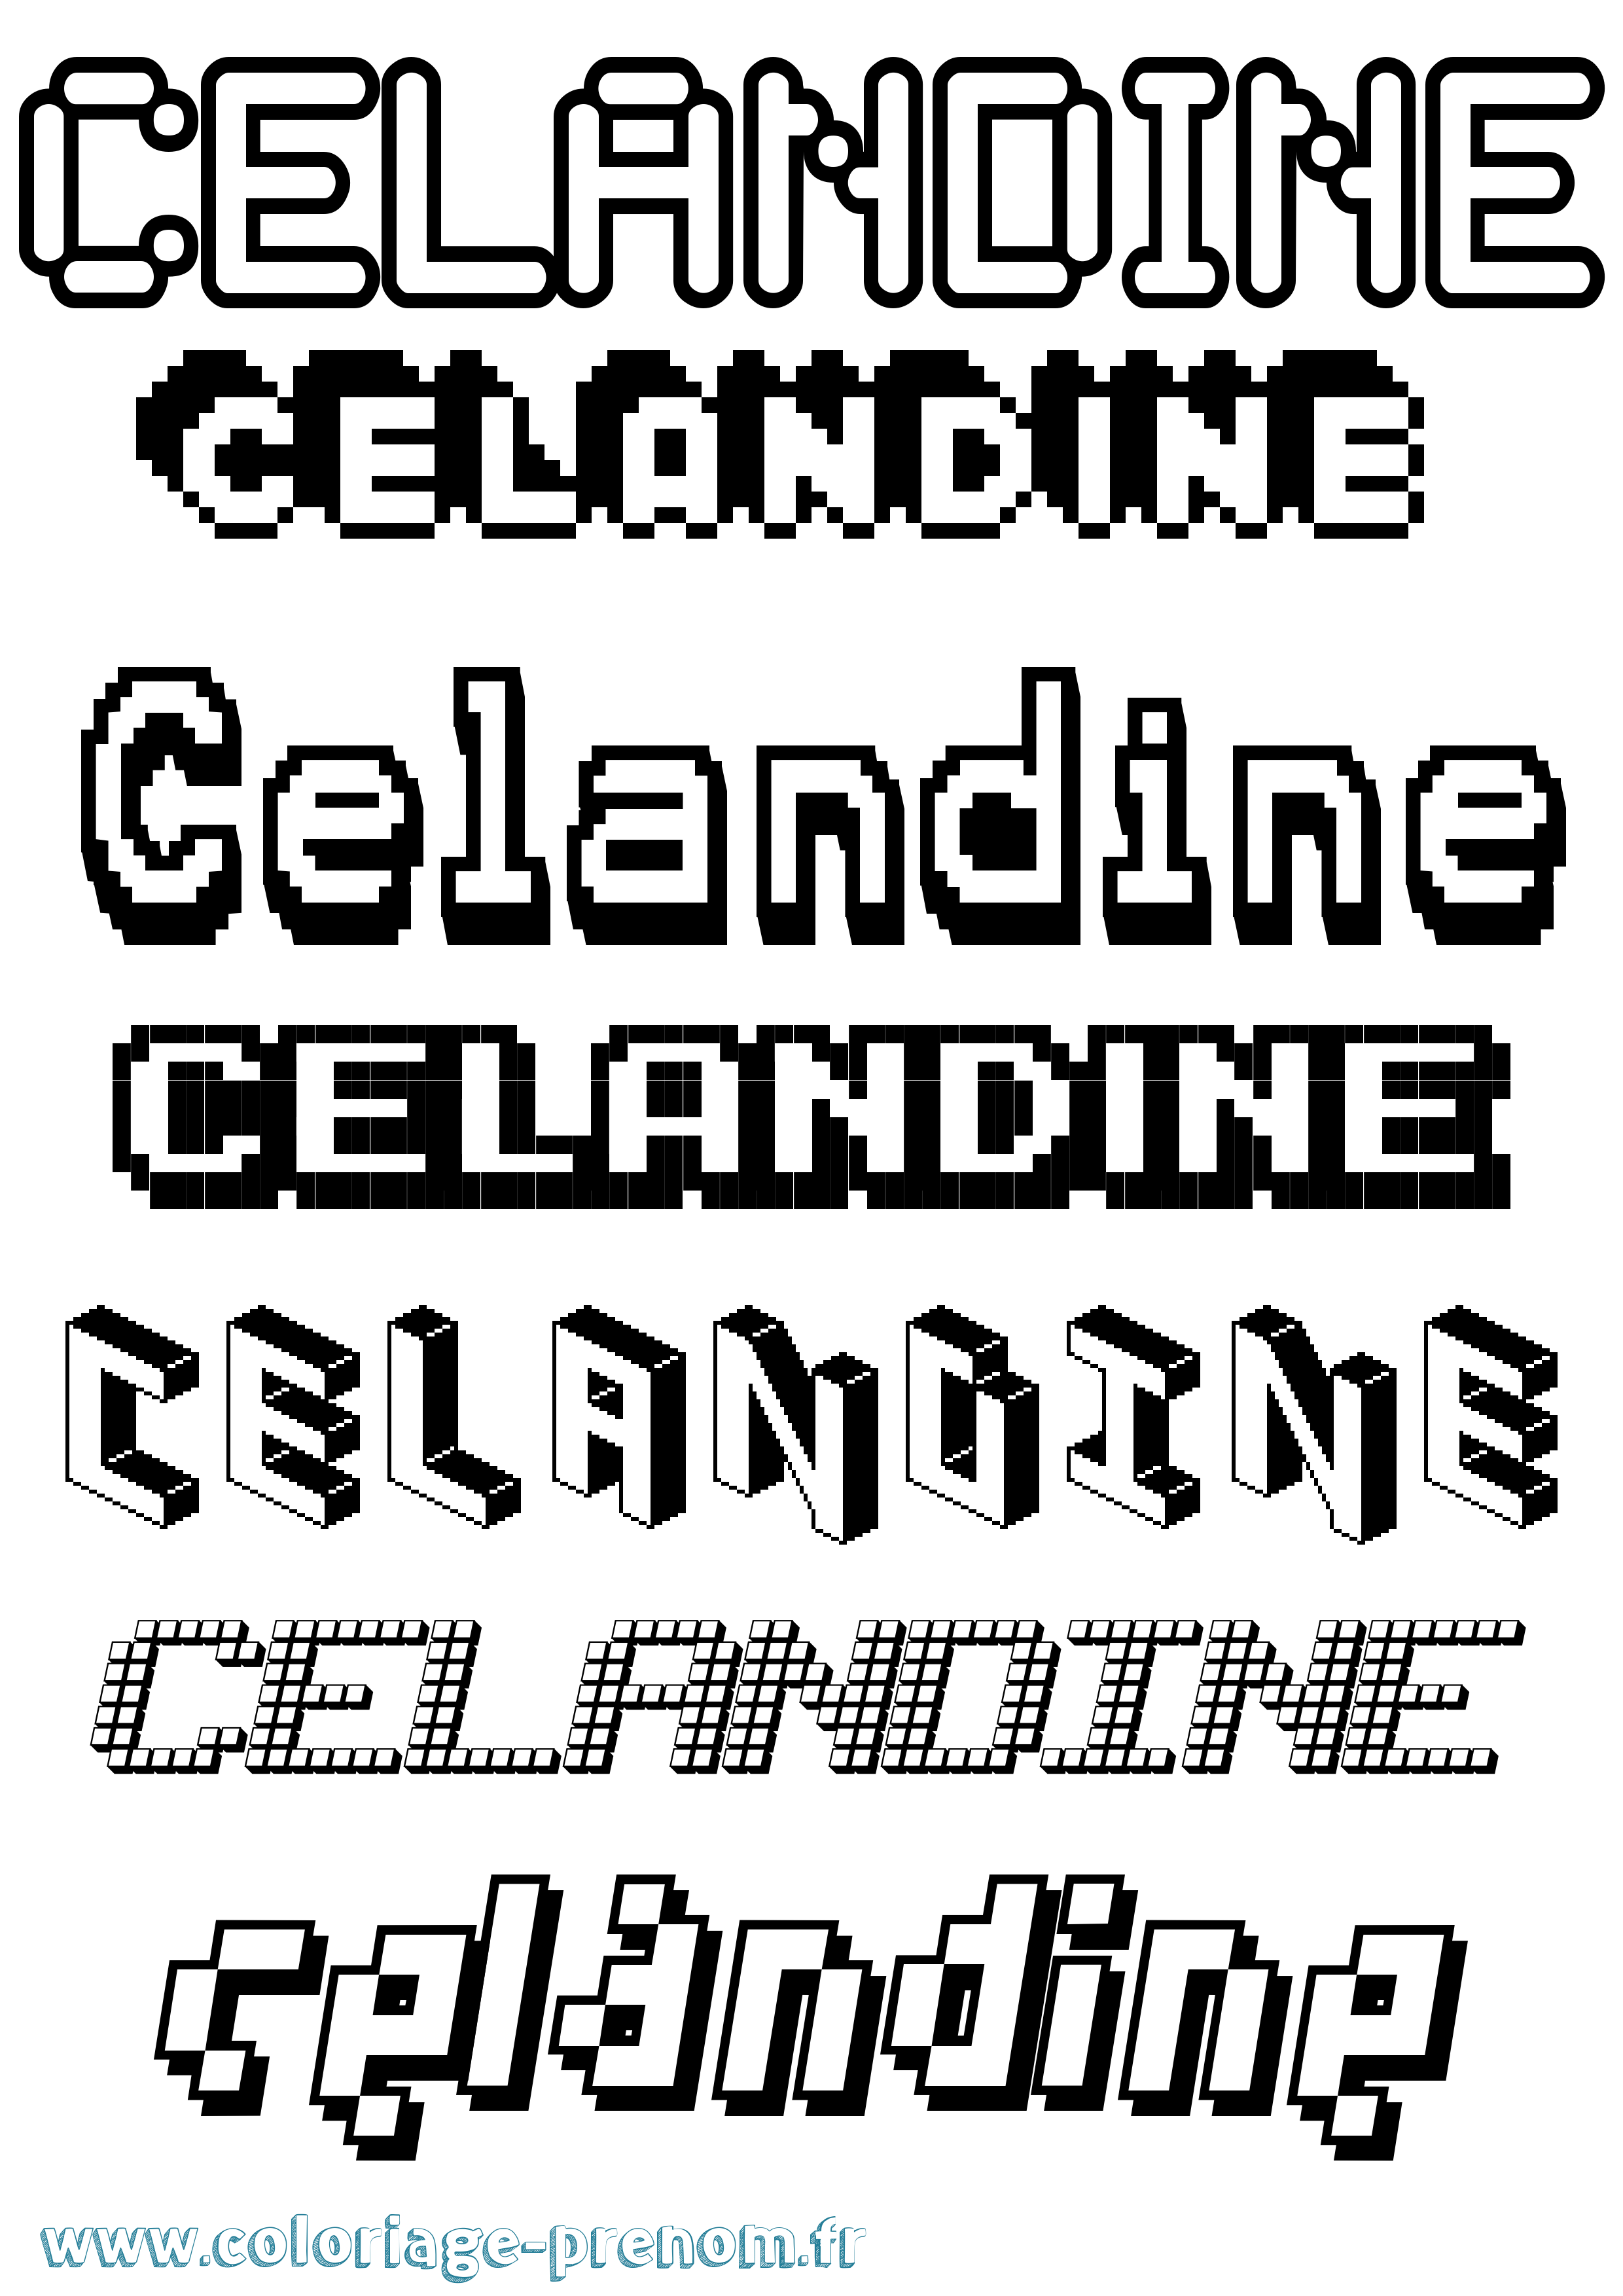 Coloriage prénom Celandine Pixel